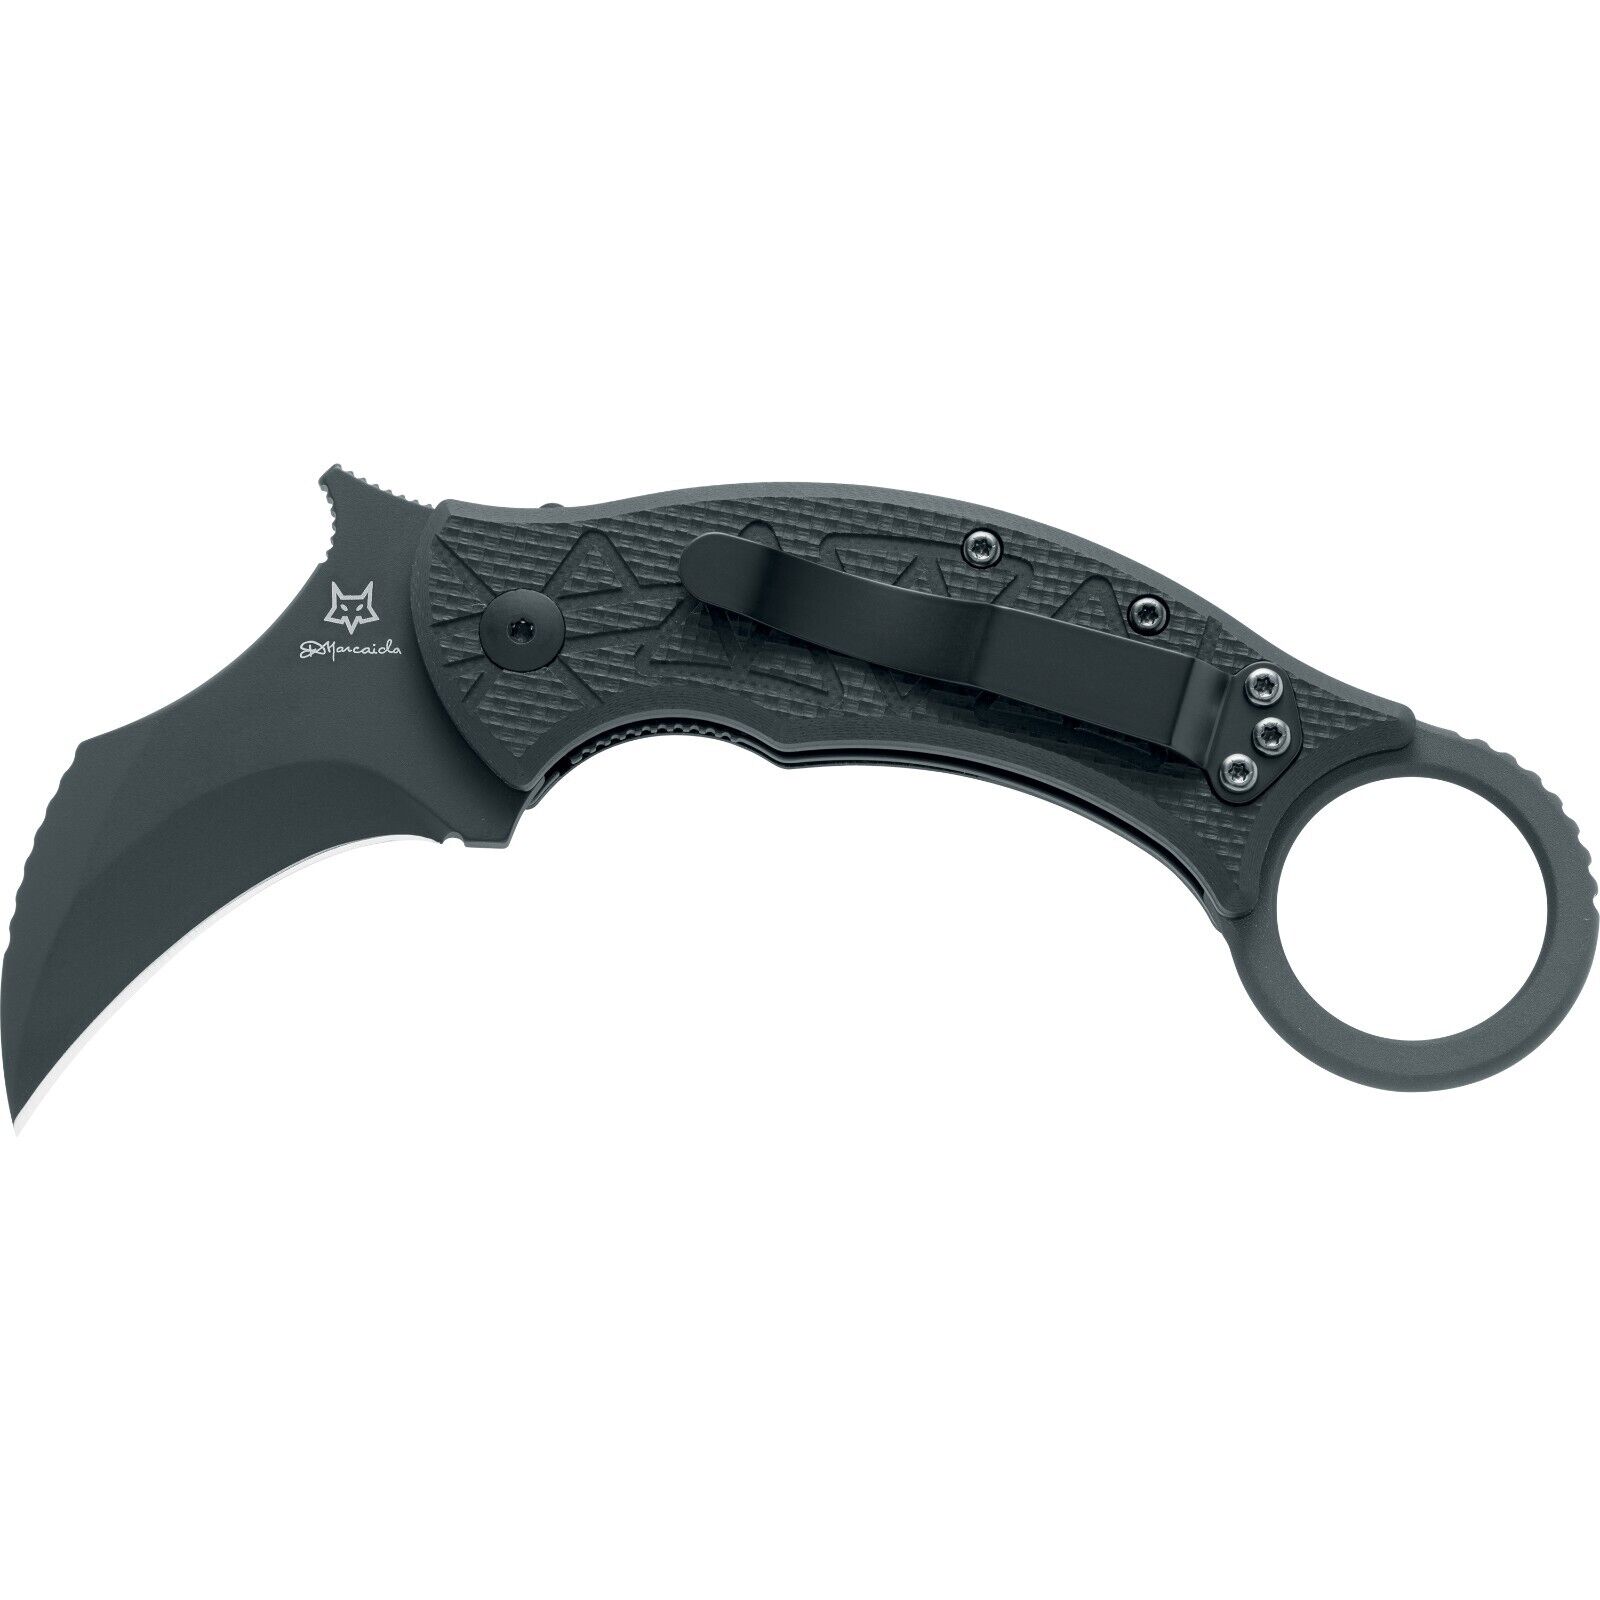 Fox Tribal K Folding Knife N690 Steel Blade Black G10/Carbon Fiber Handle